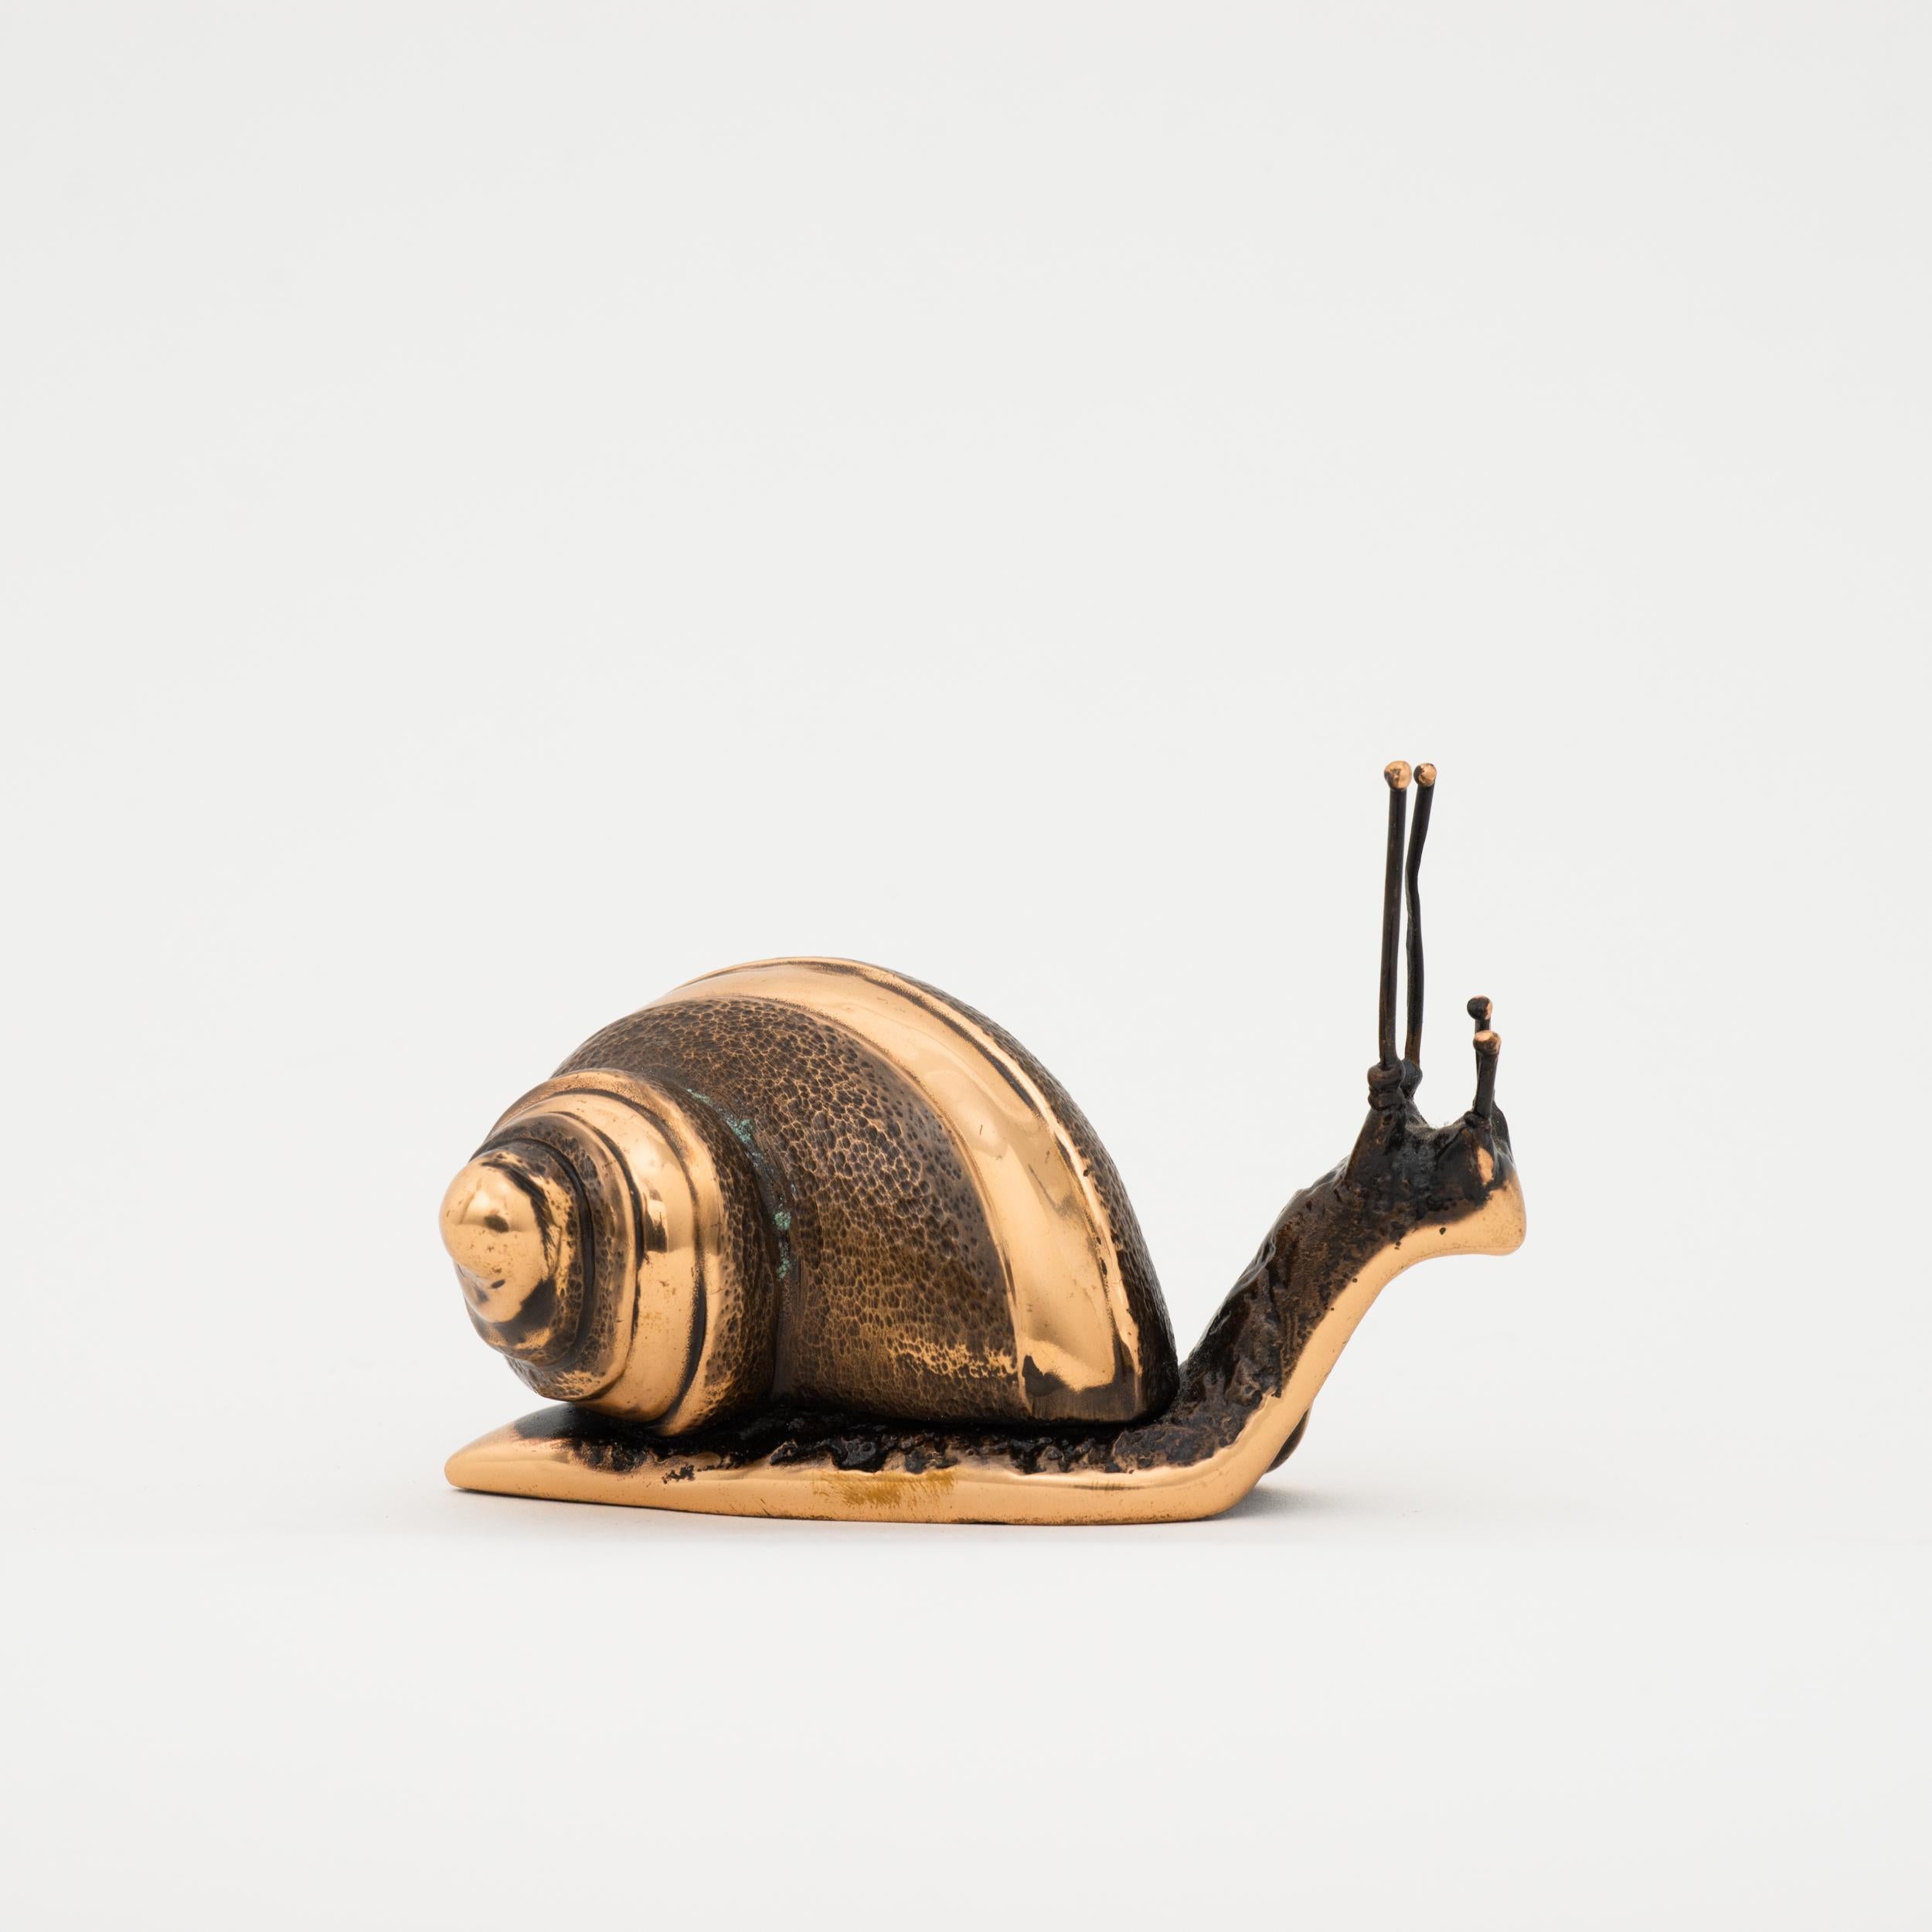 snail hood ornament